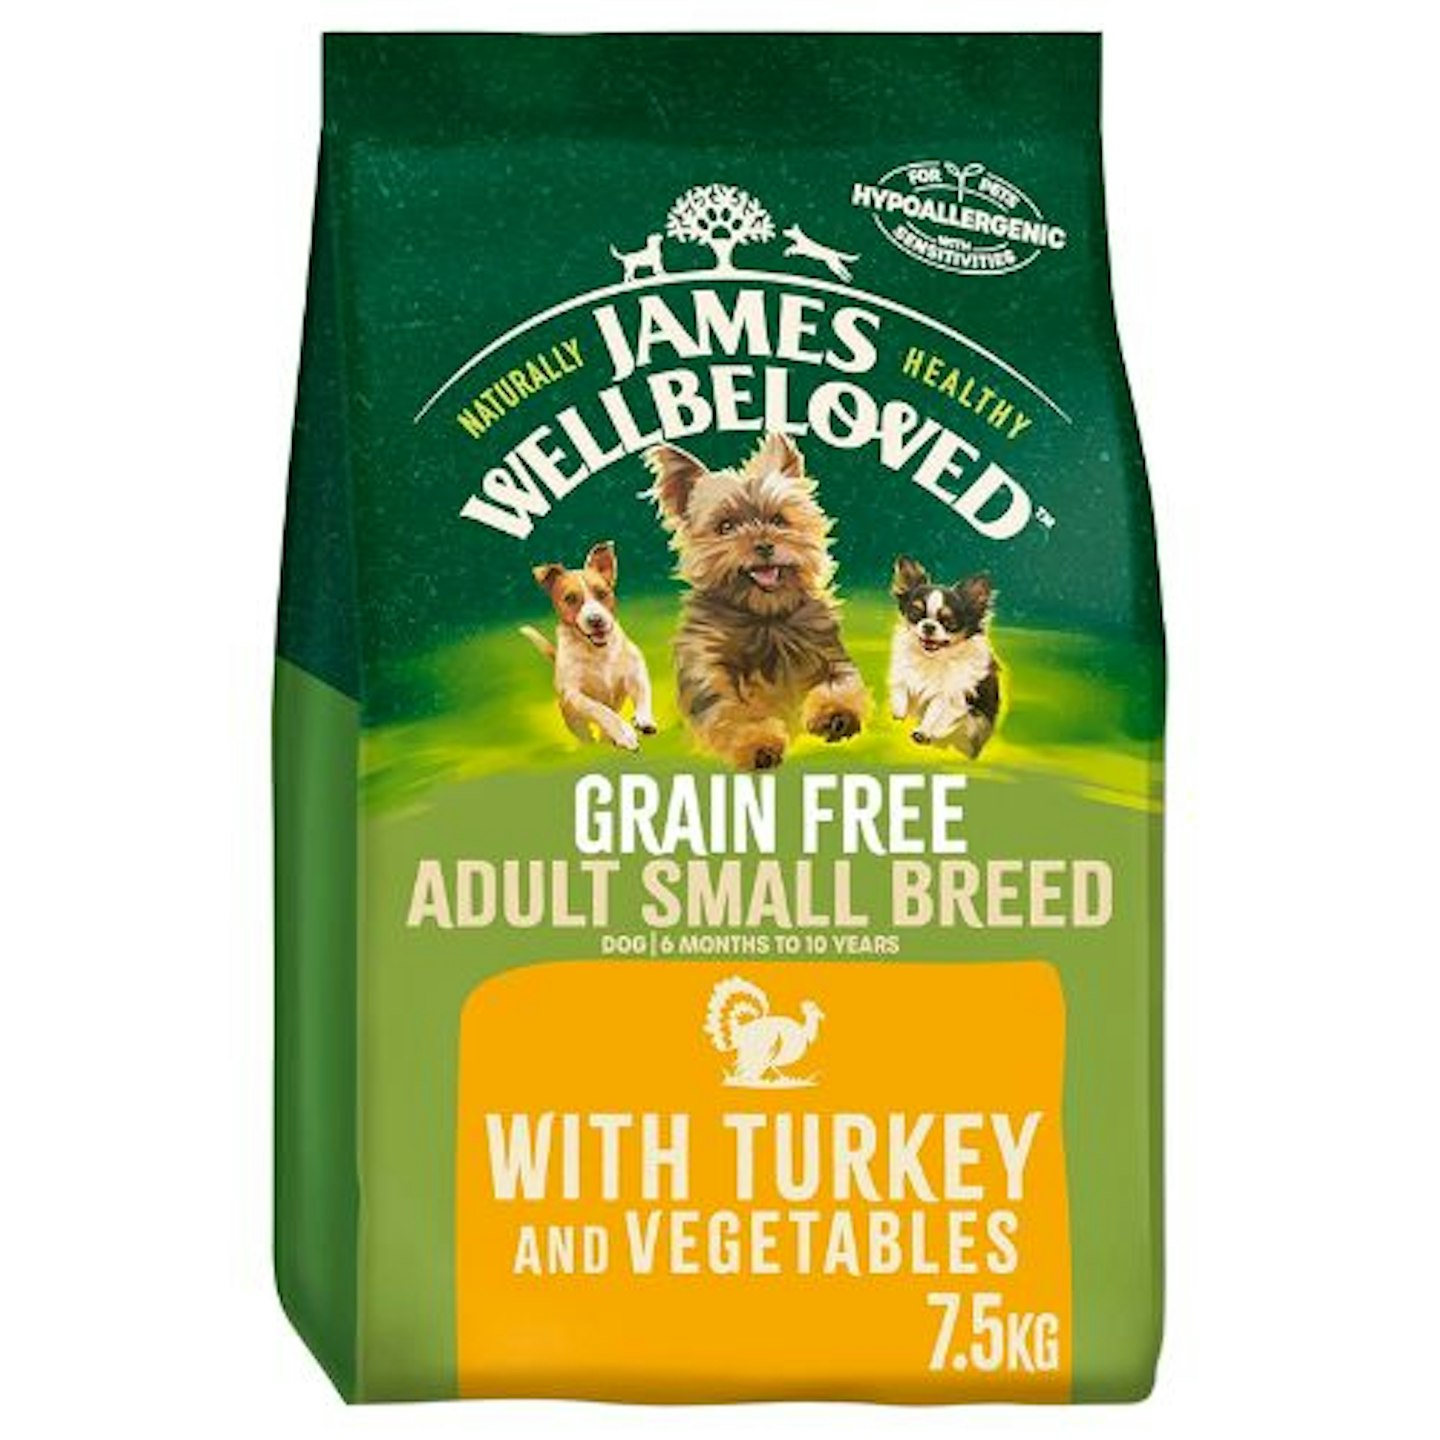 James Wellbeloved Grain Free Adult Small Breed Turkey and Vegetables 7.5 kg Bag, Hypoallergenic Dry Dog Food